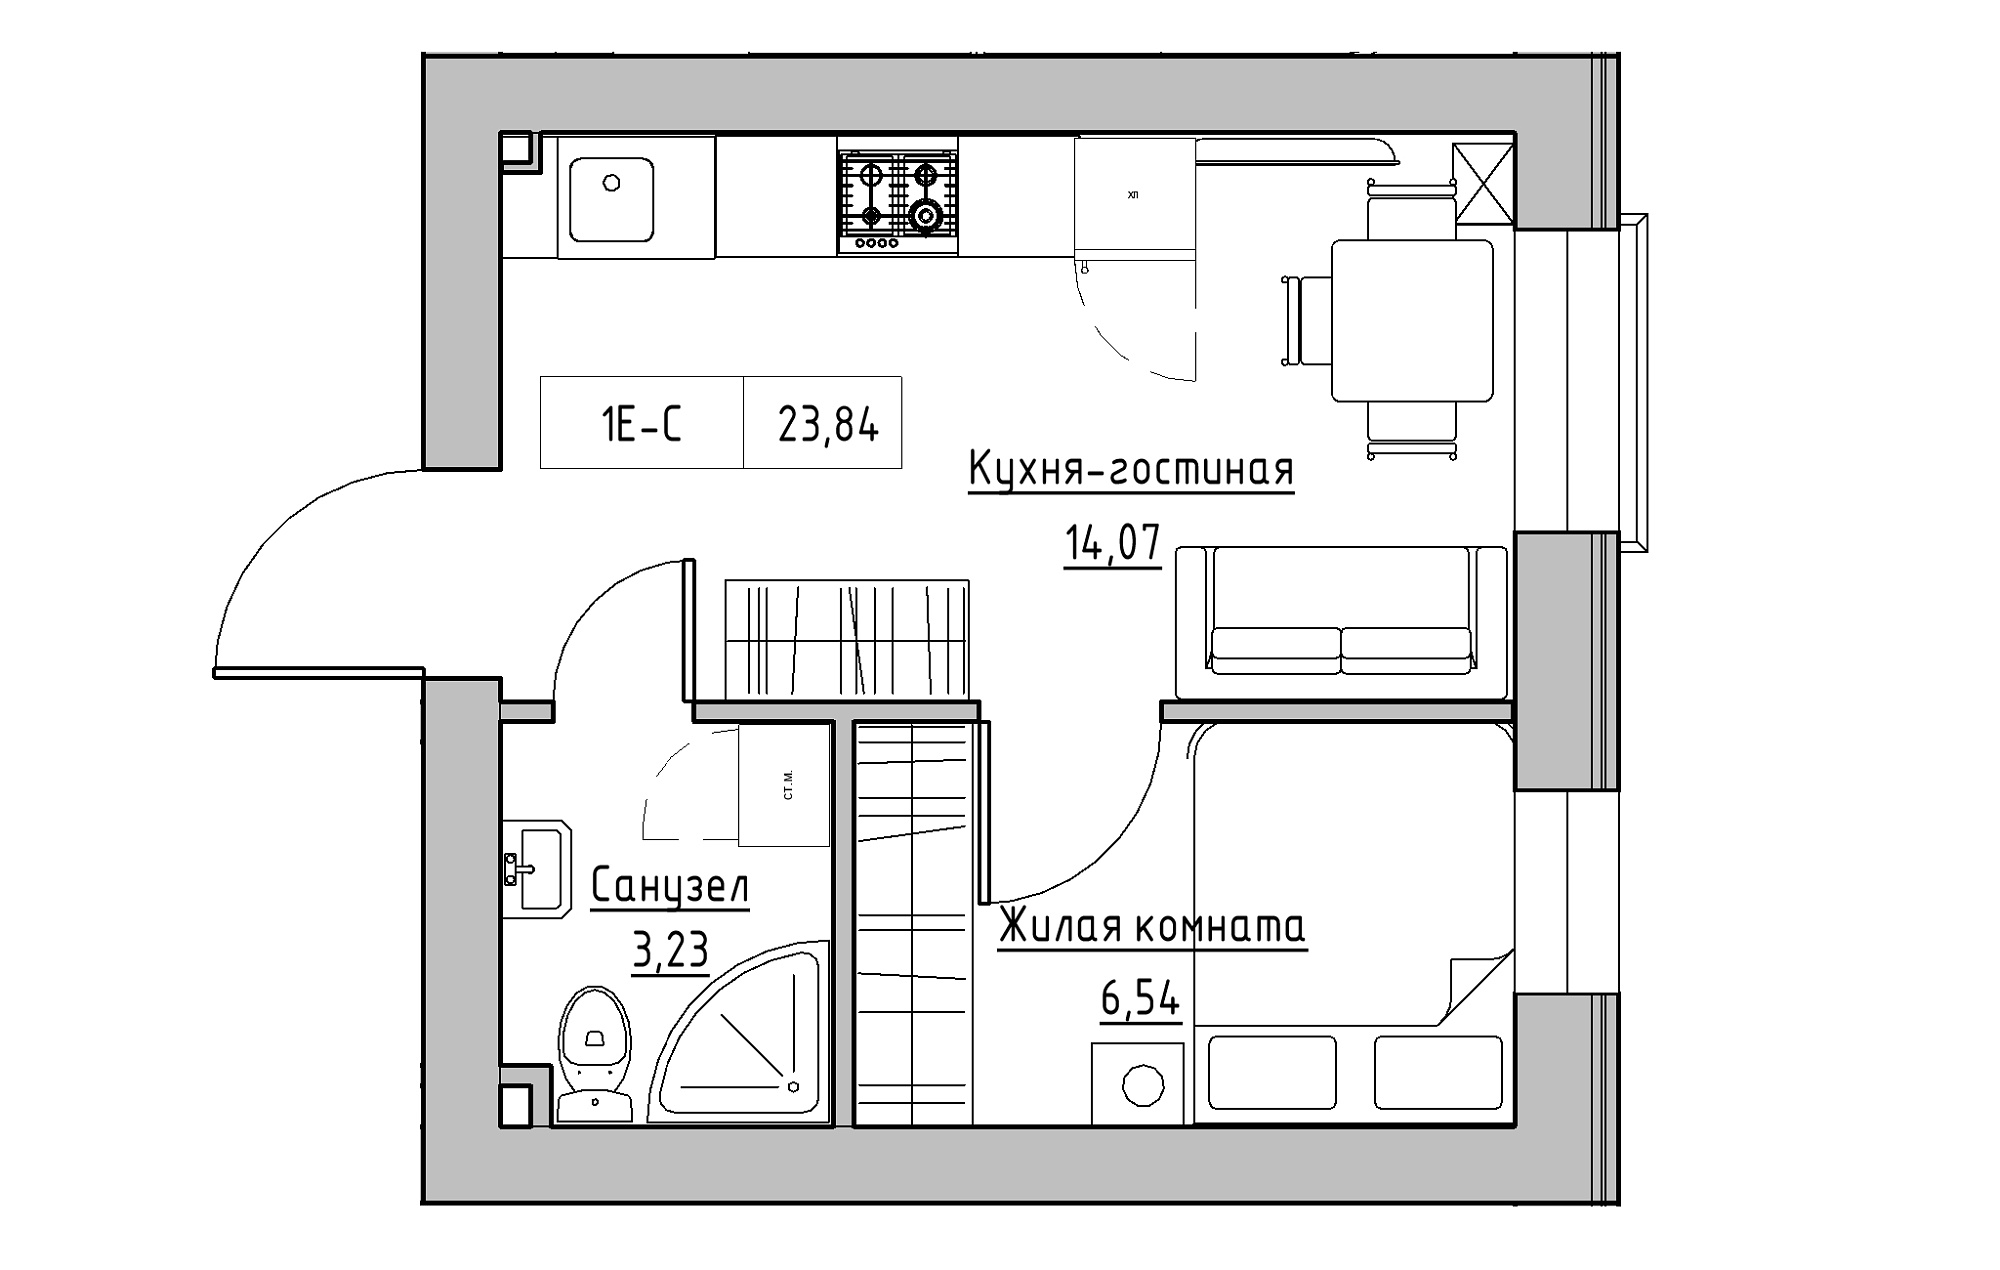 Planning 1-rm flats area 23.84m2, KS-018-01/0011.